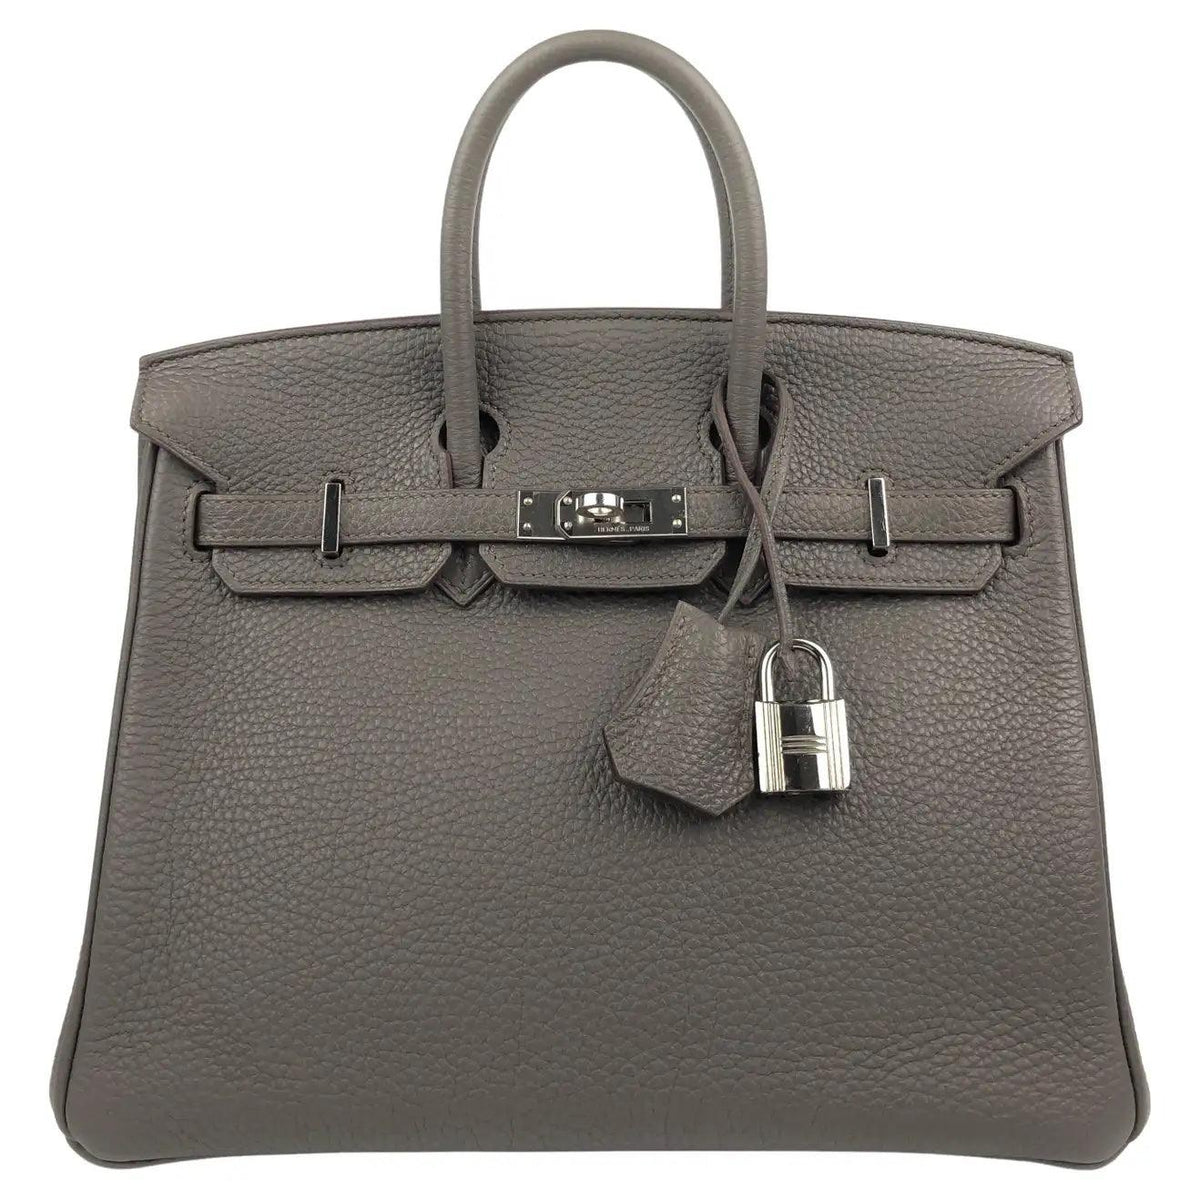 Hermes Birkin 25 Handbag Bag